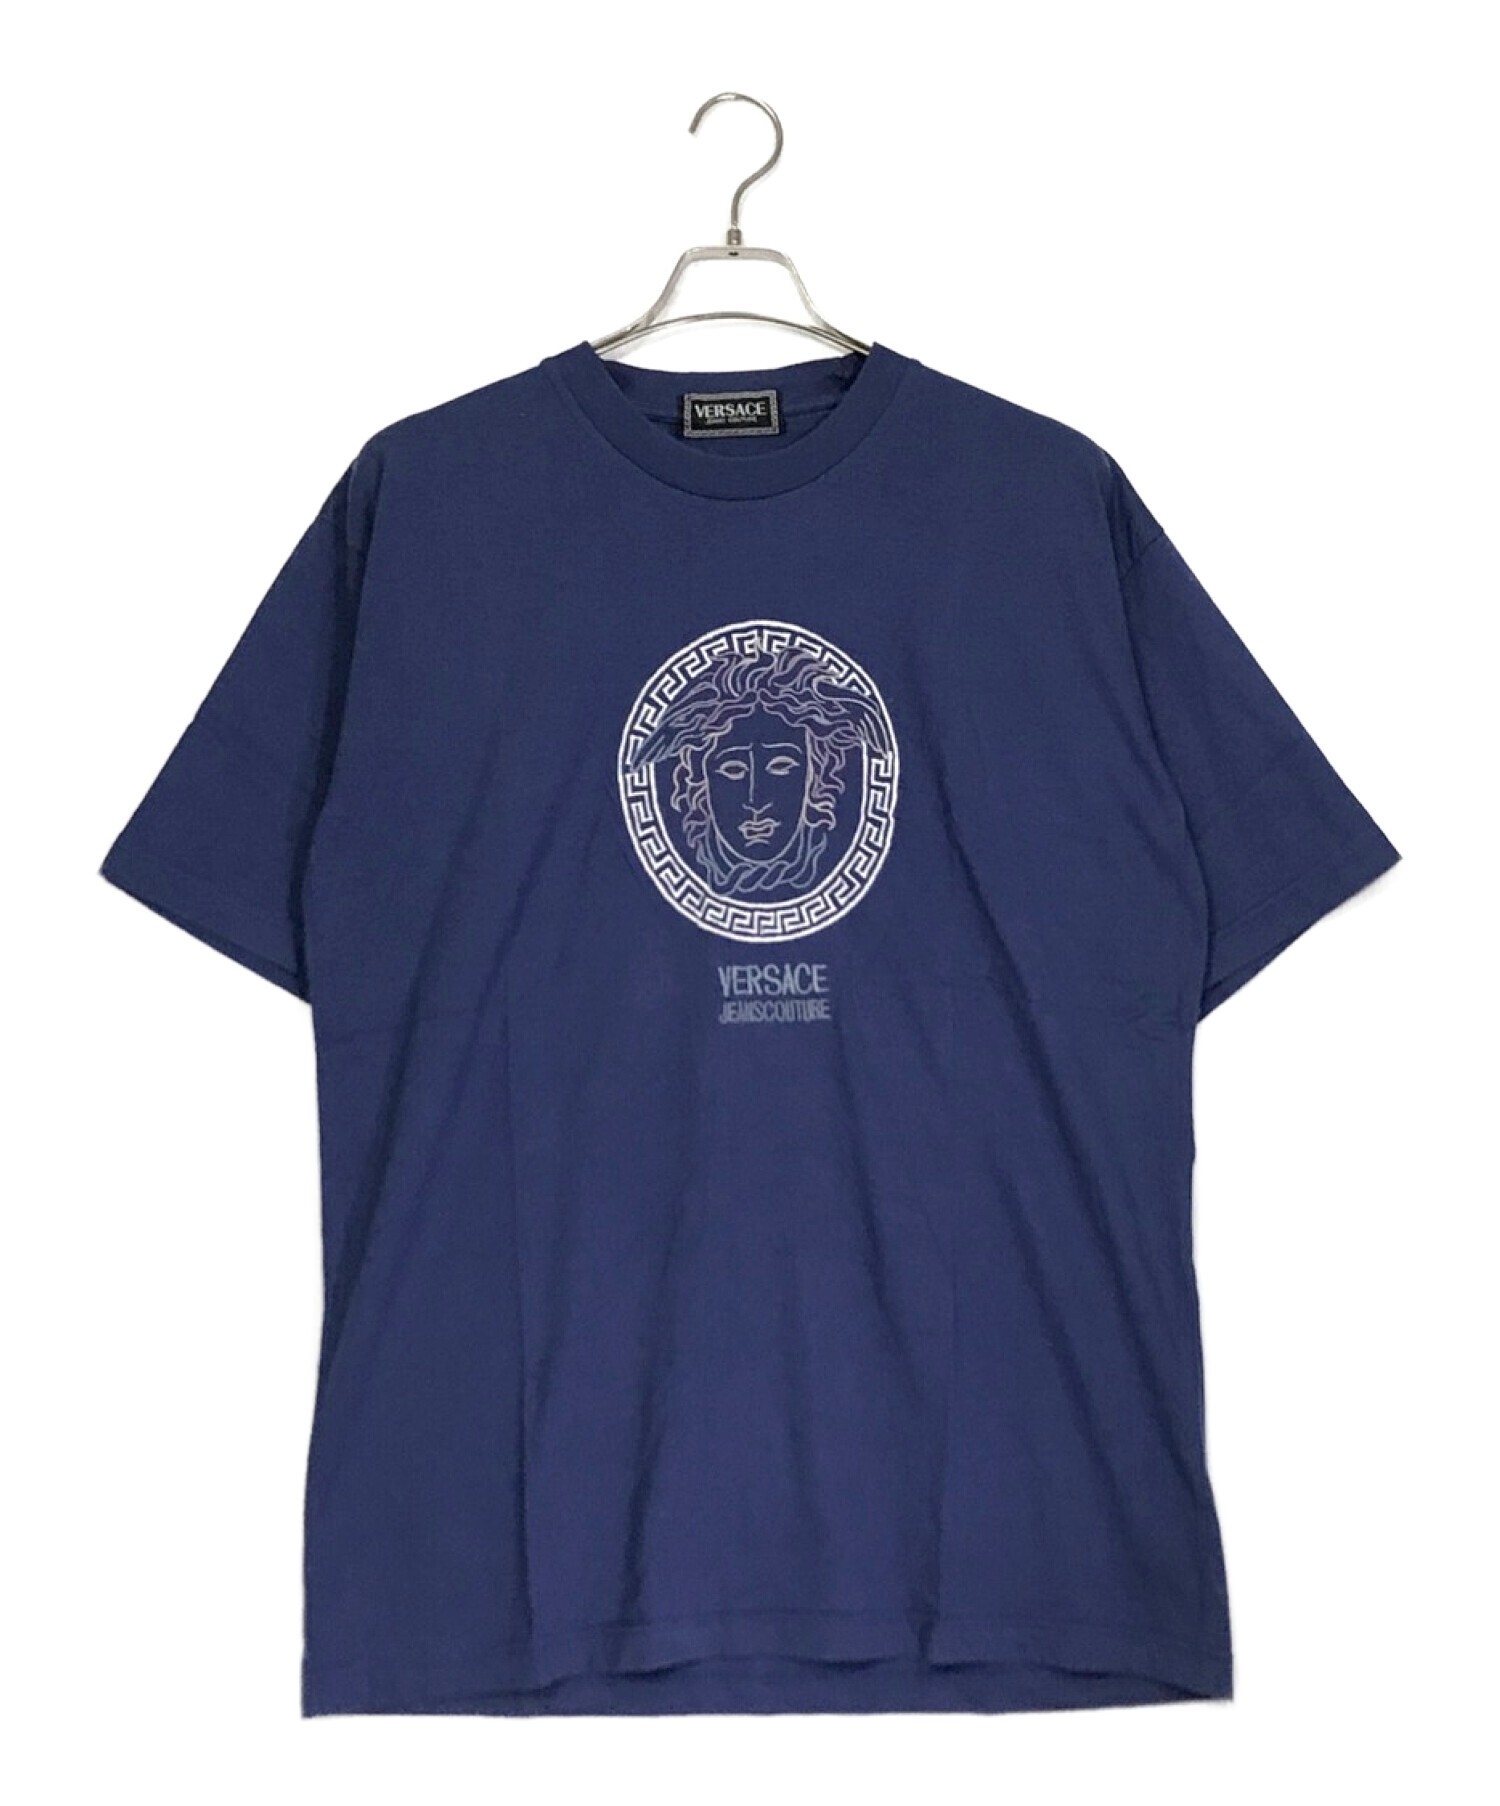 Tシャツ/カットソー(半袖/袖なし)versace ヴェルサーチ ロゴ Tシャツ